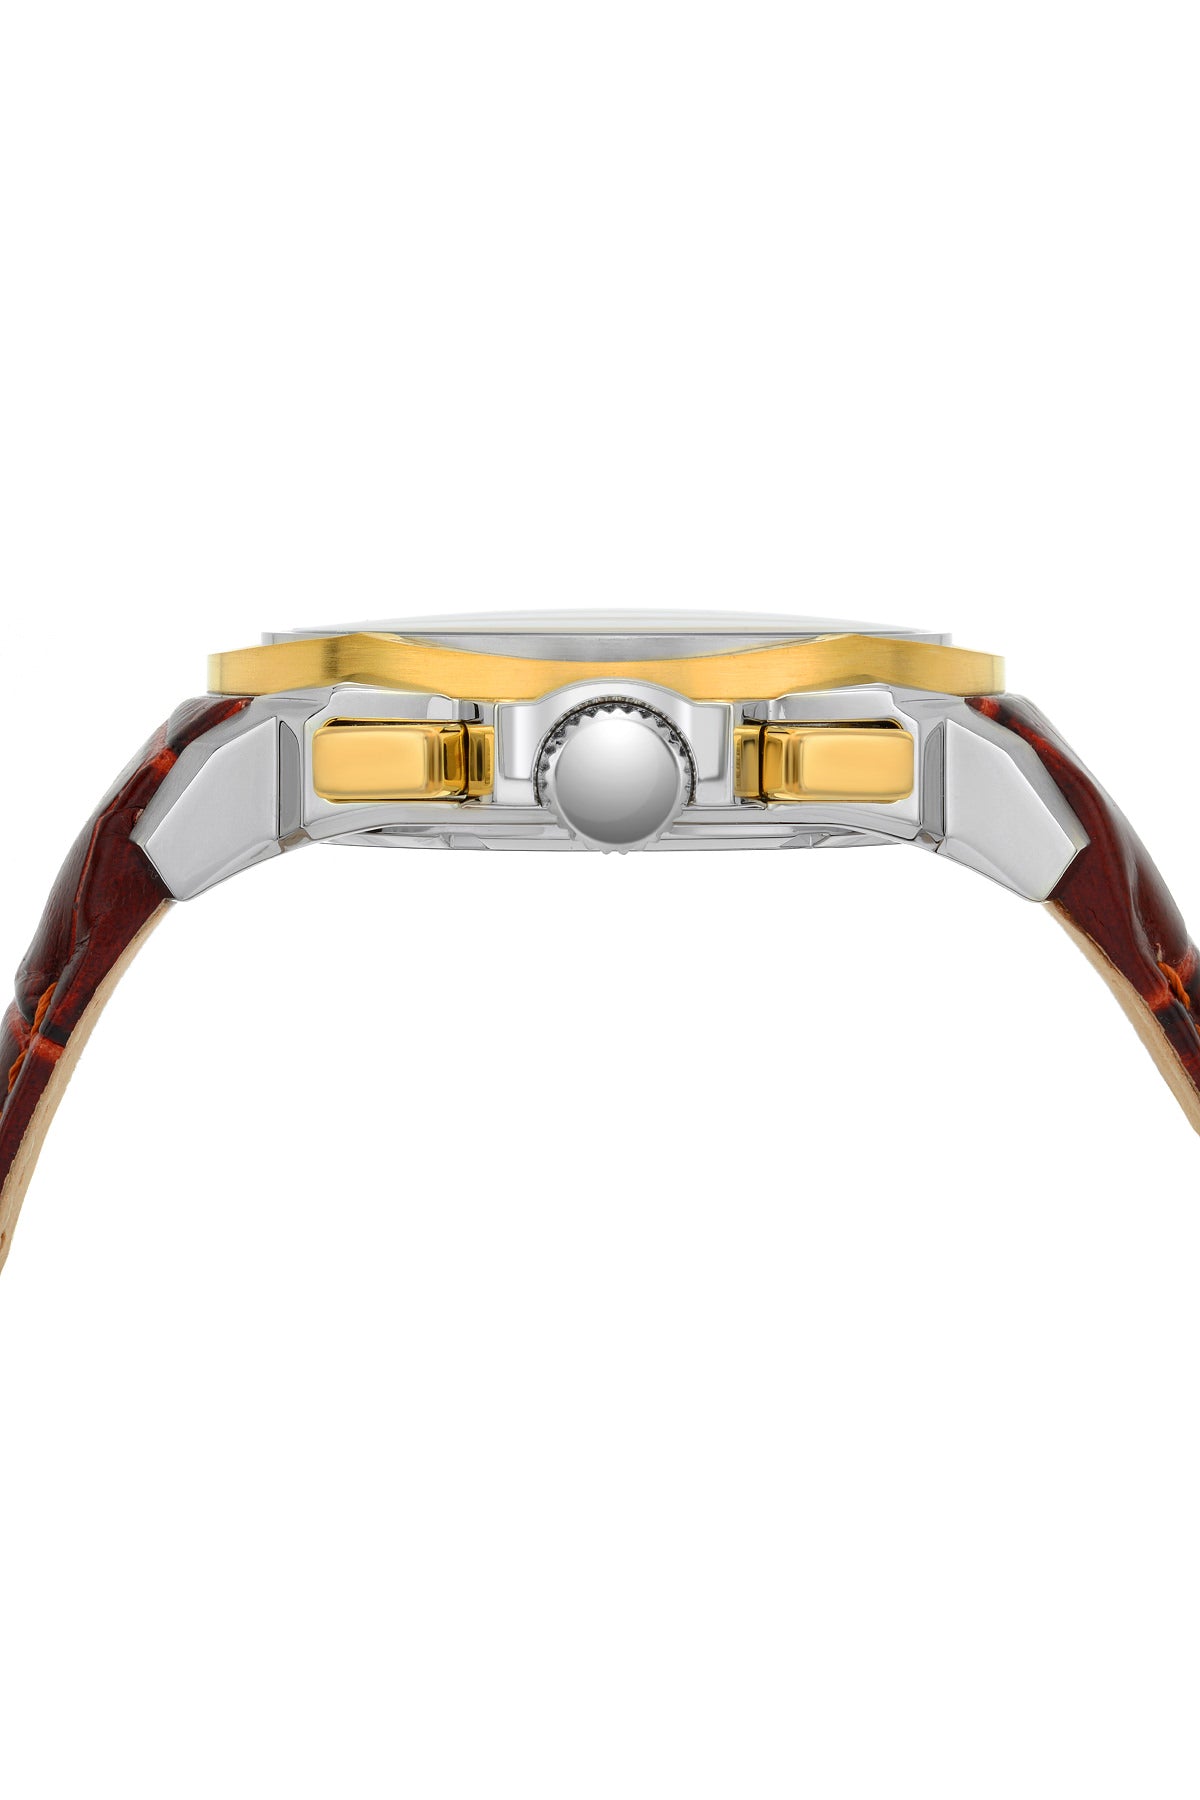 Porsamo Bleu Olivier luxury chronograph men's watch, genuine leather band, gold, brown 322BOLL